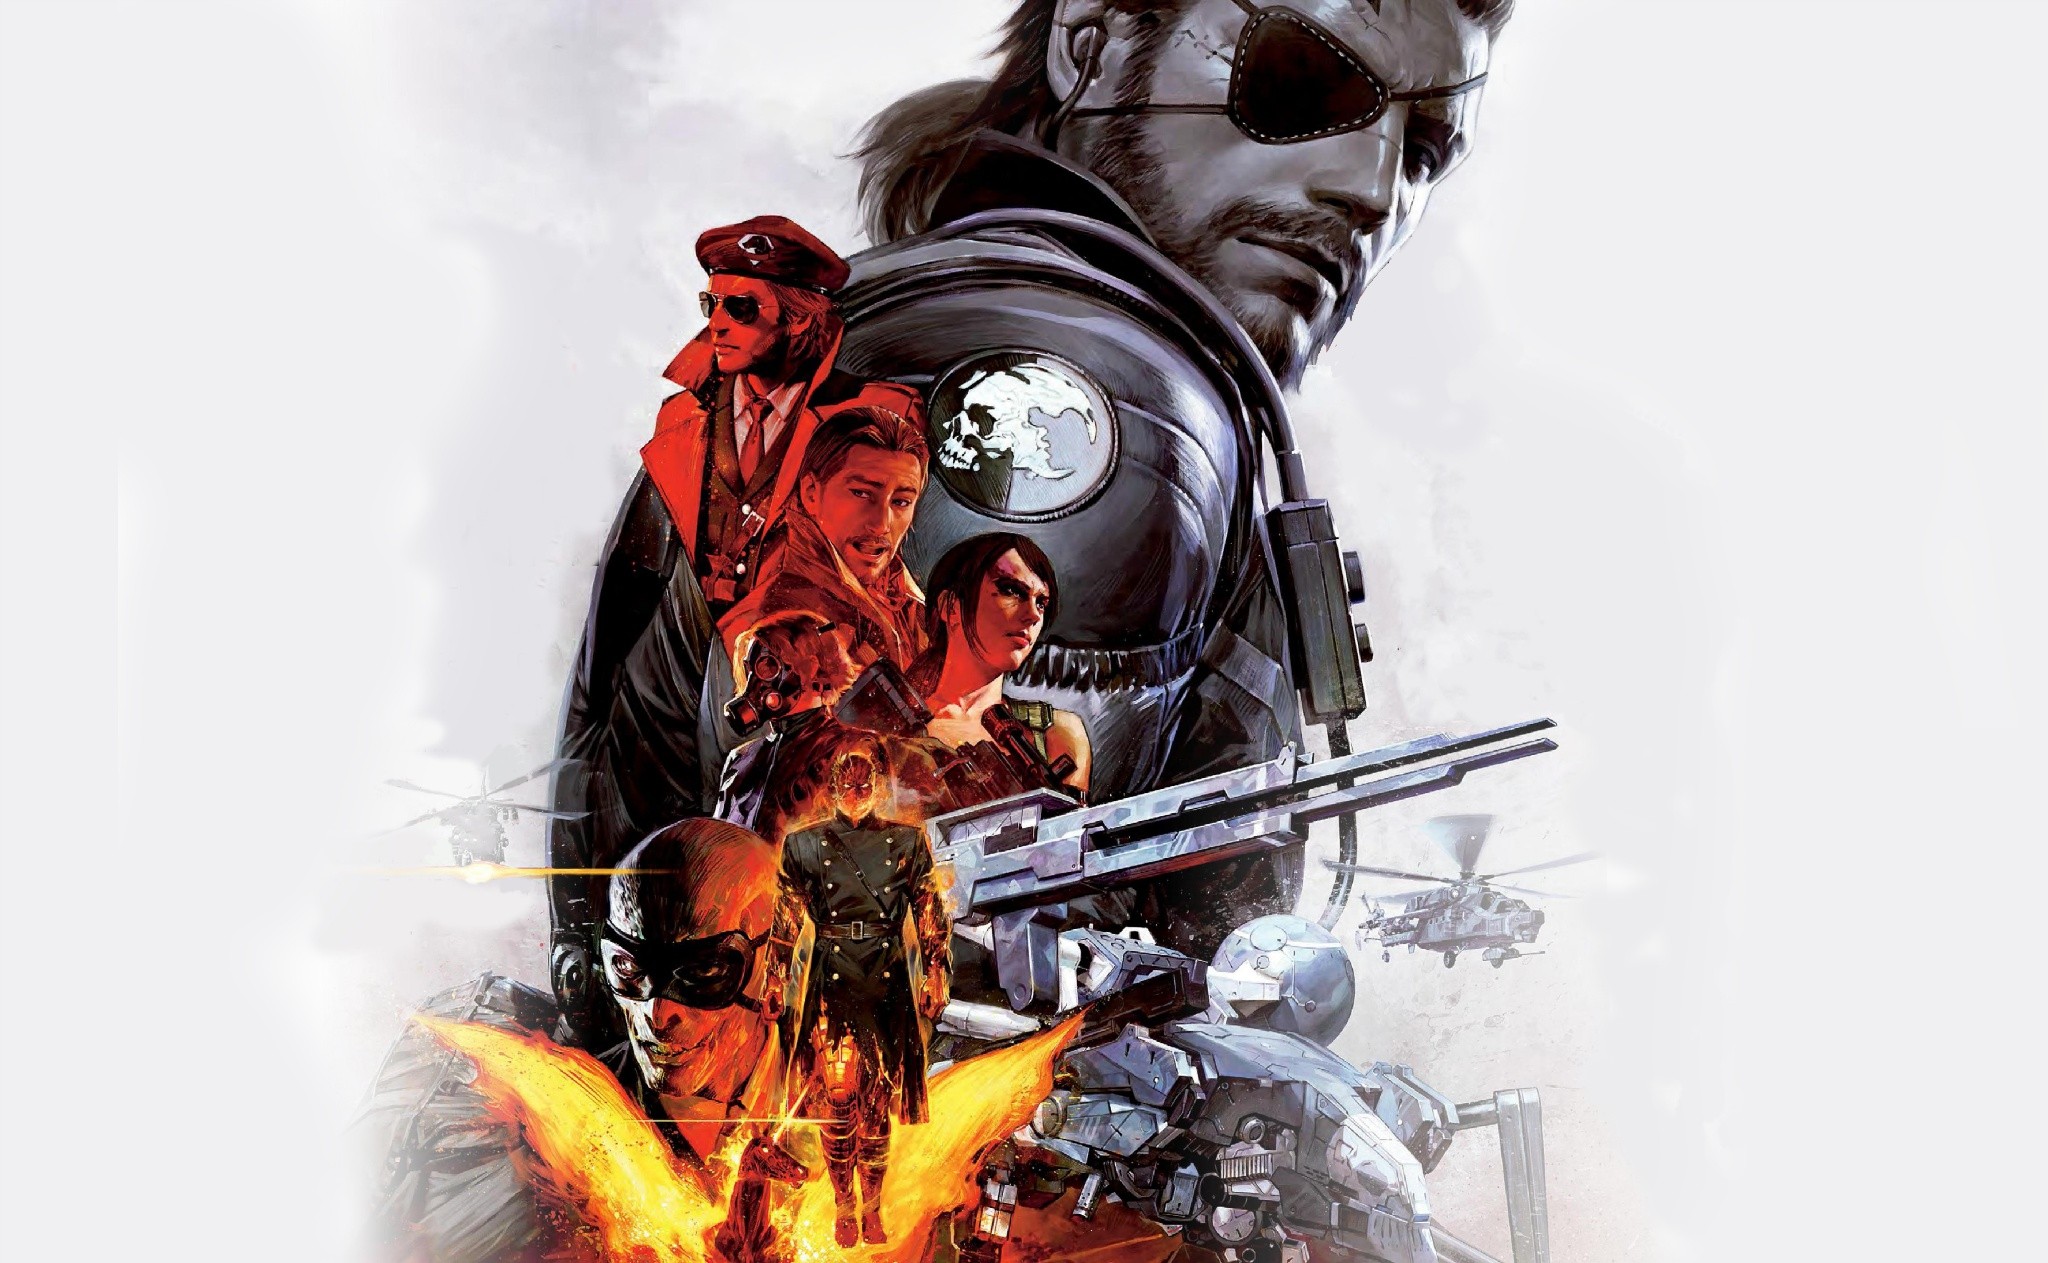 Metal Gear, Metal Gear Solid Wallpaper